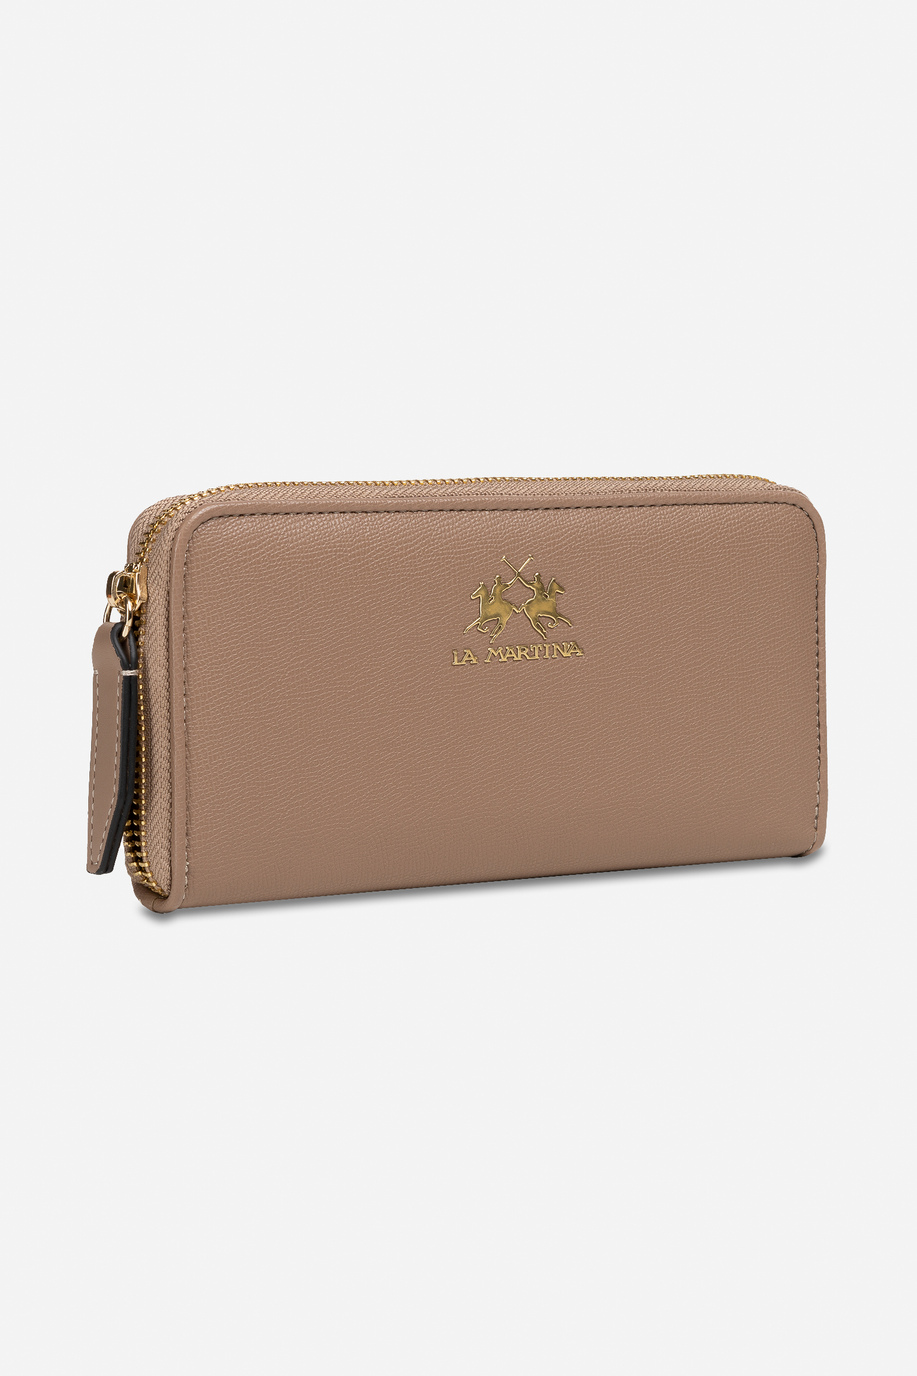 Women's PU fabric purse - Accessories | La Martina - Official Online Shop